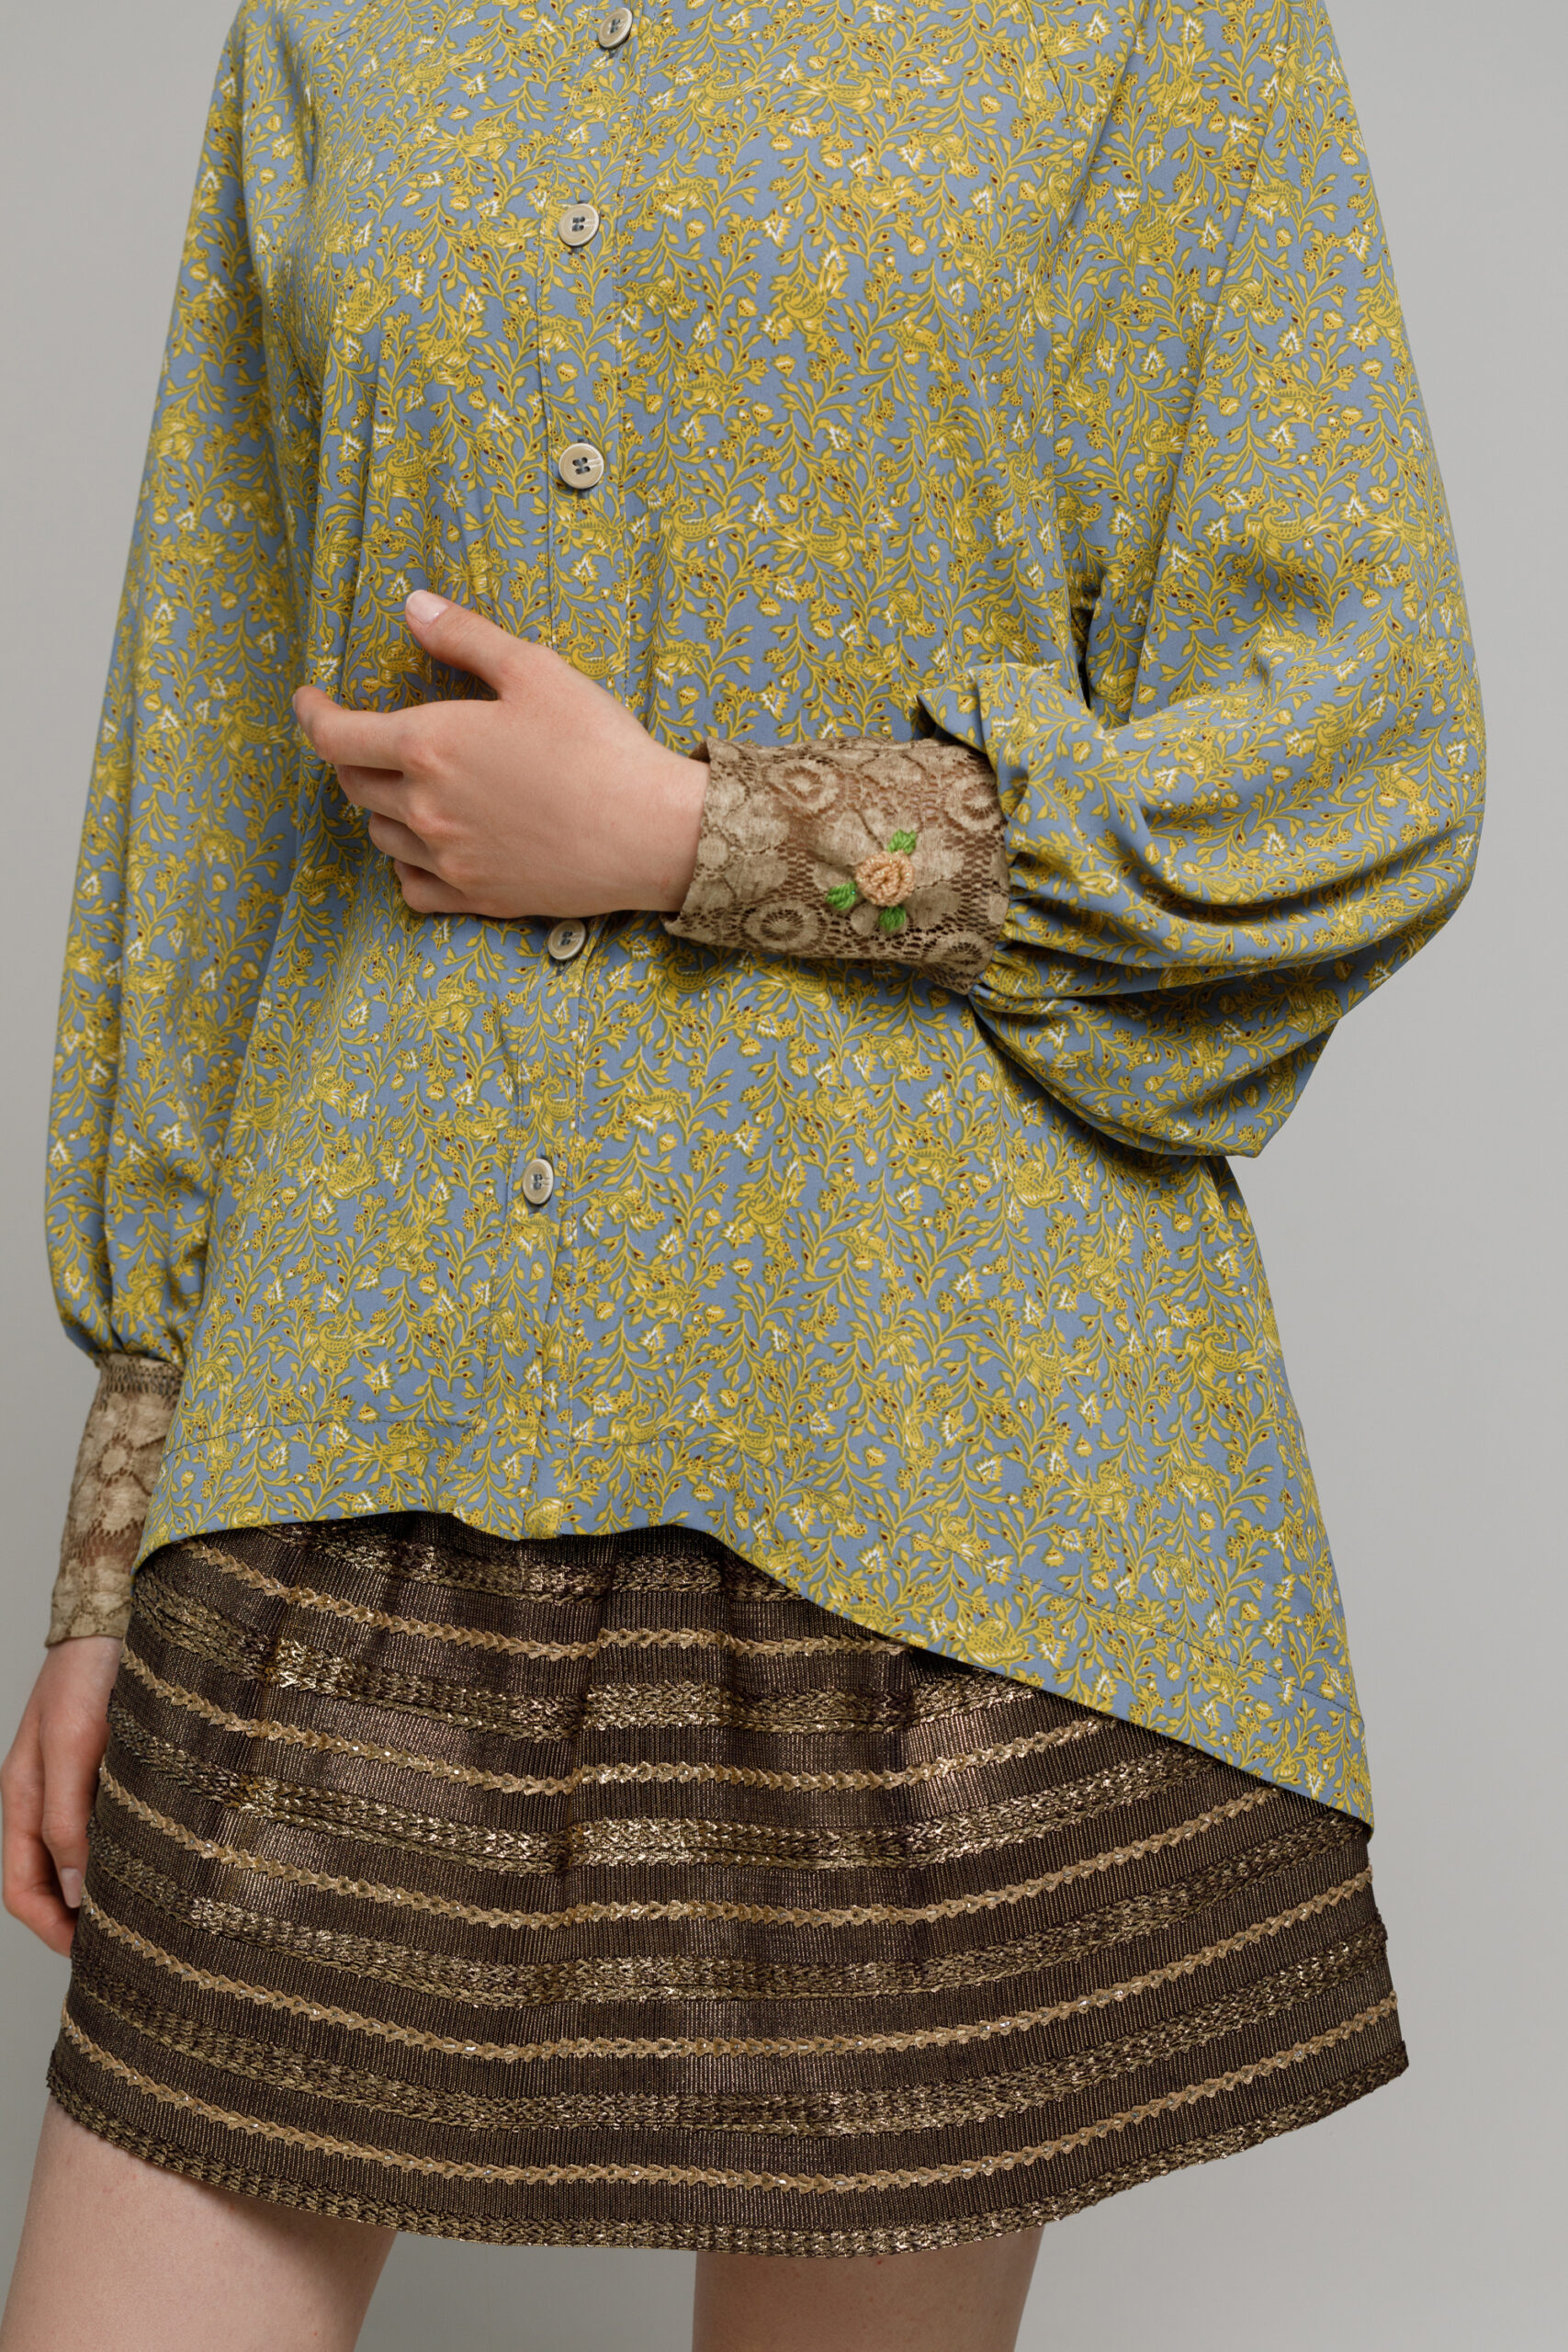 MARINA shirt with floral print. Natural fabrics, original design, handmade embroidery